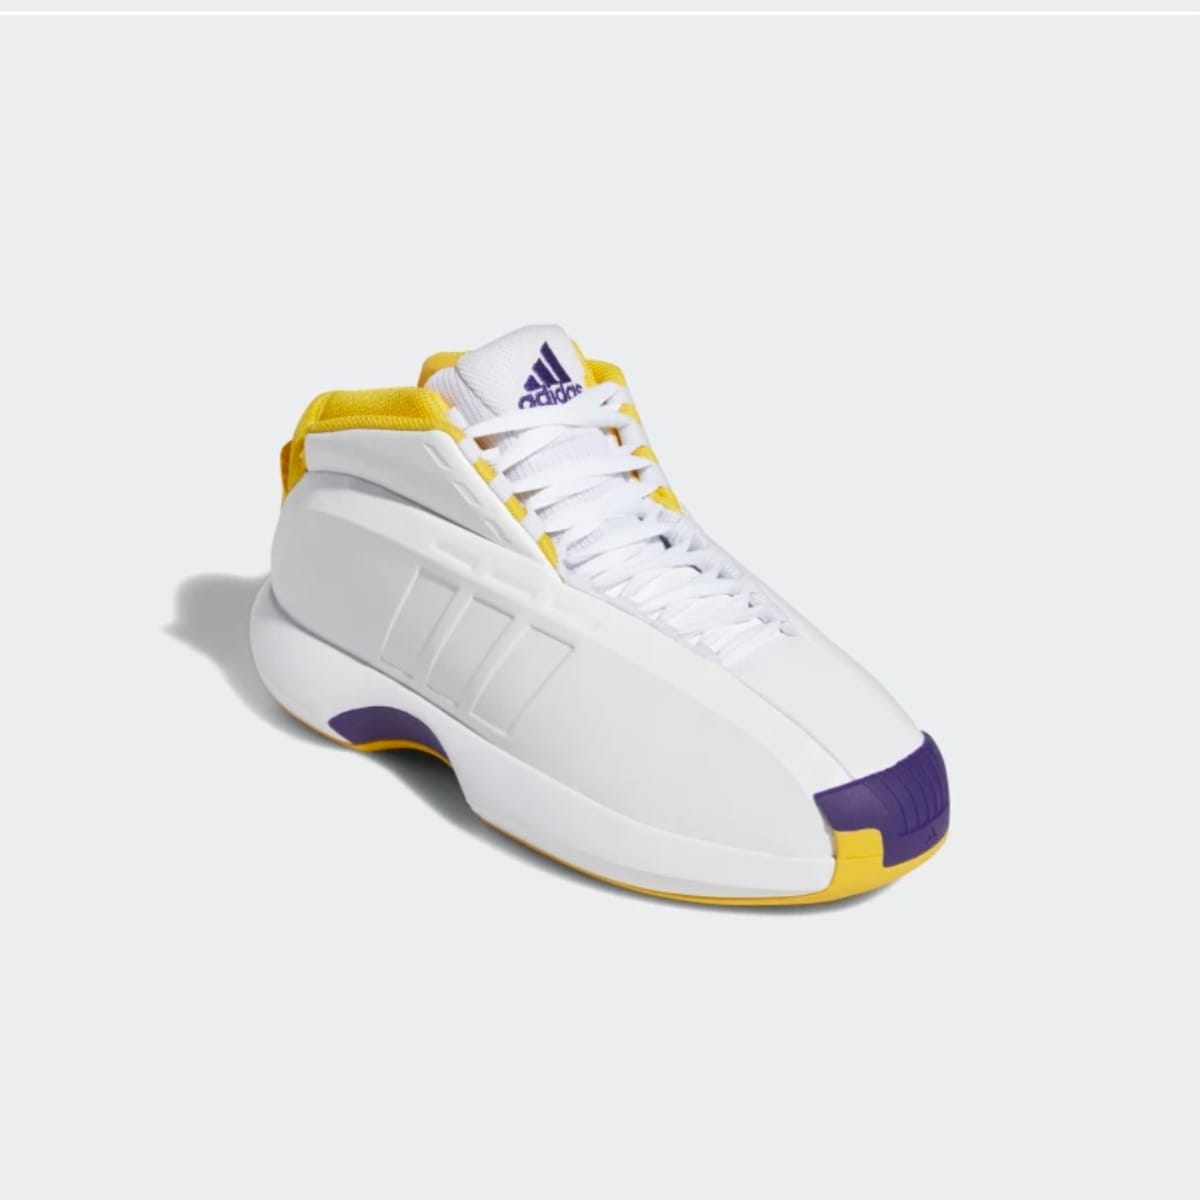 Stadium Bad honing Kobe Bryant's Retro Shoes Still Available on Adidas Website - Sports  Illustrated FanNation Kicks News, Analysis and More